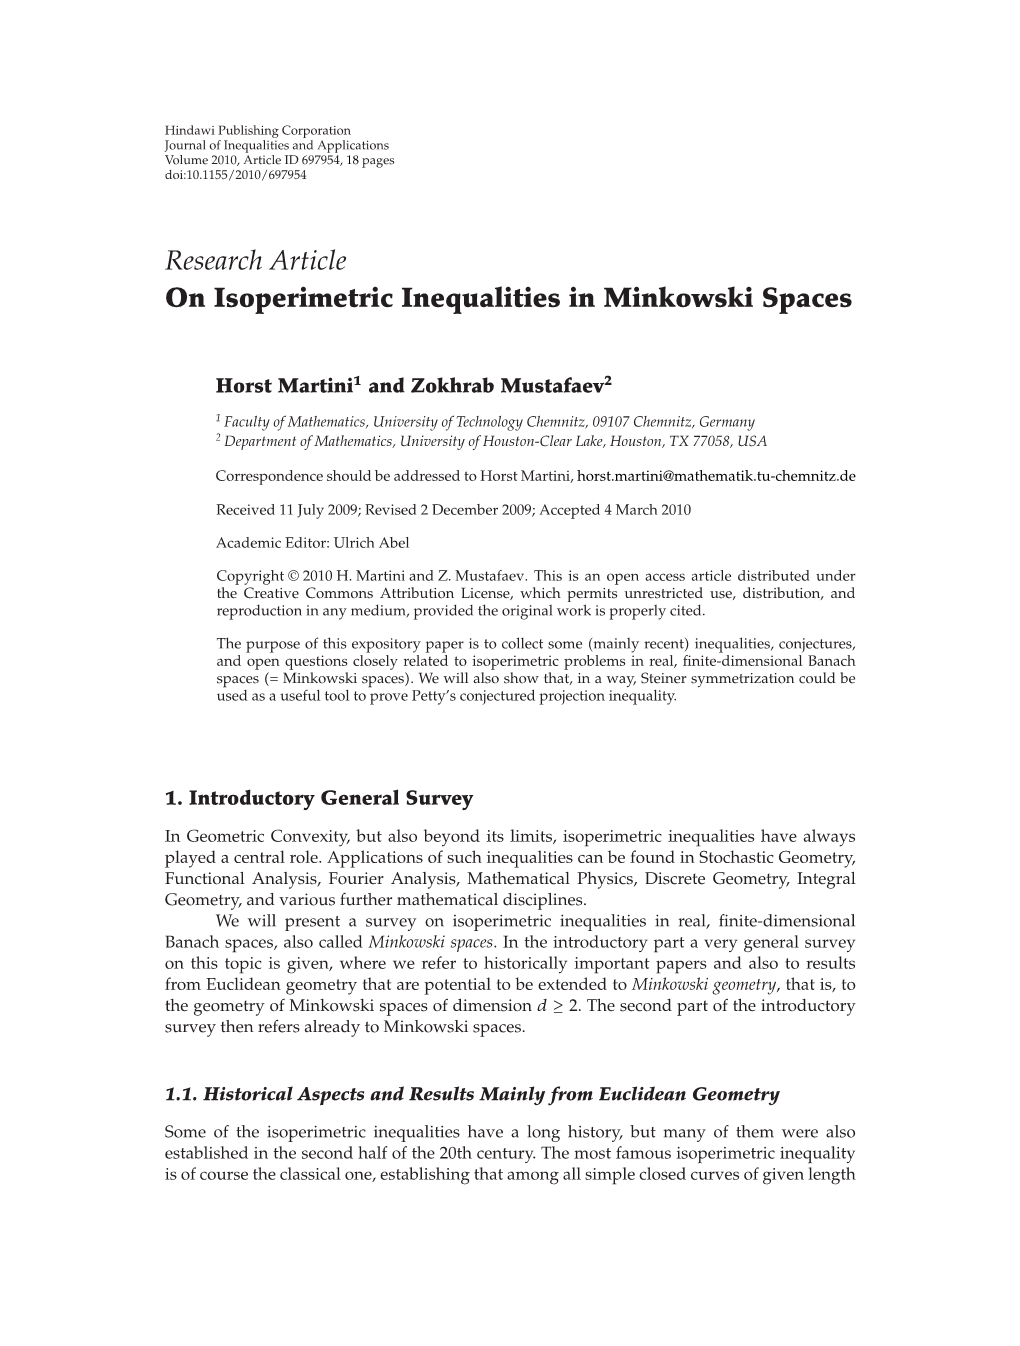 On Isoperimetric Inequalities in Minkowski Spaces